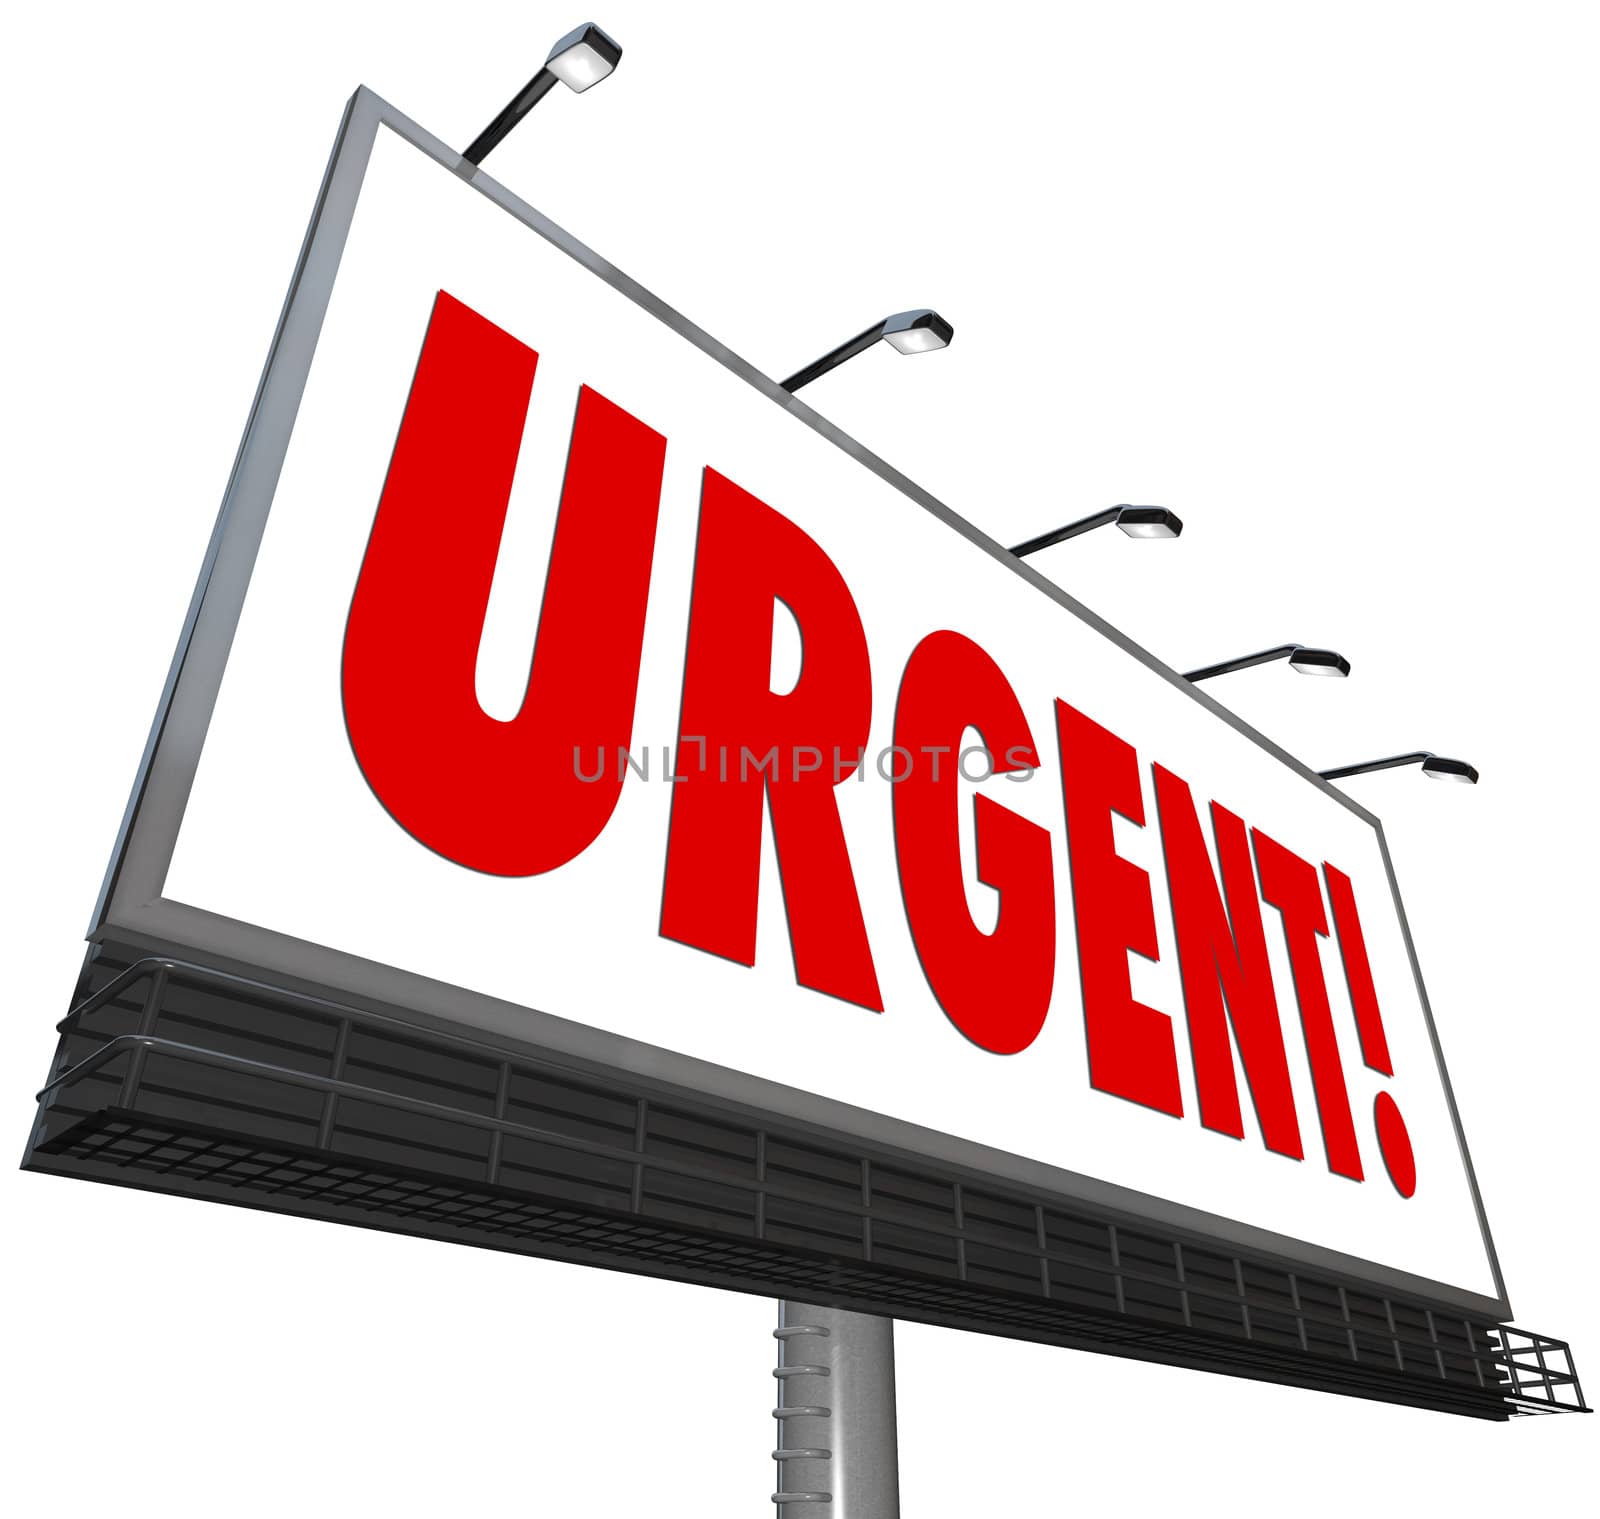 Urgent Word Immediate Attention Billboard Sign by iQoncept